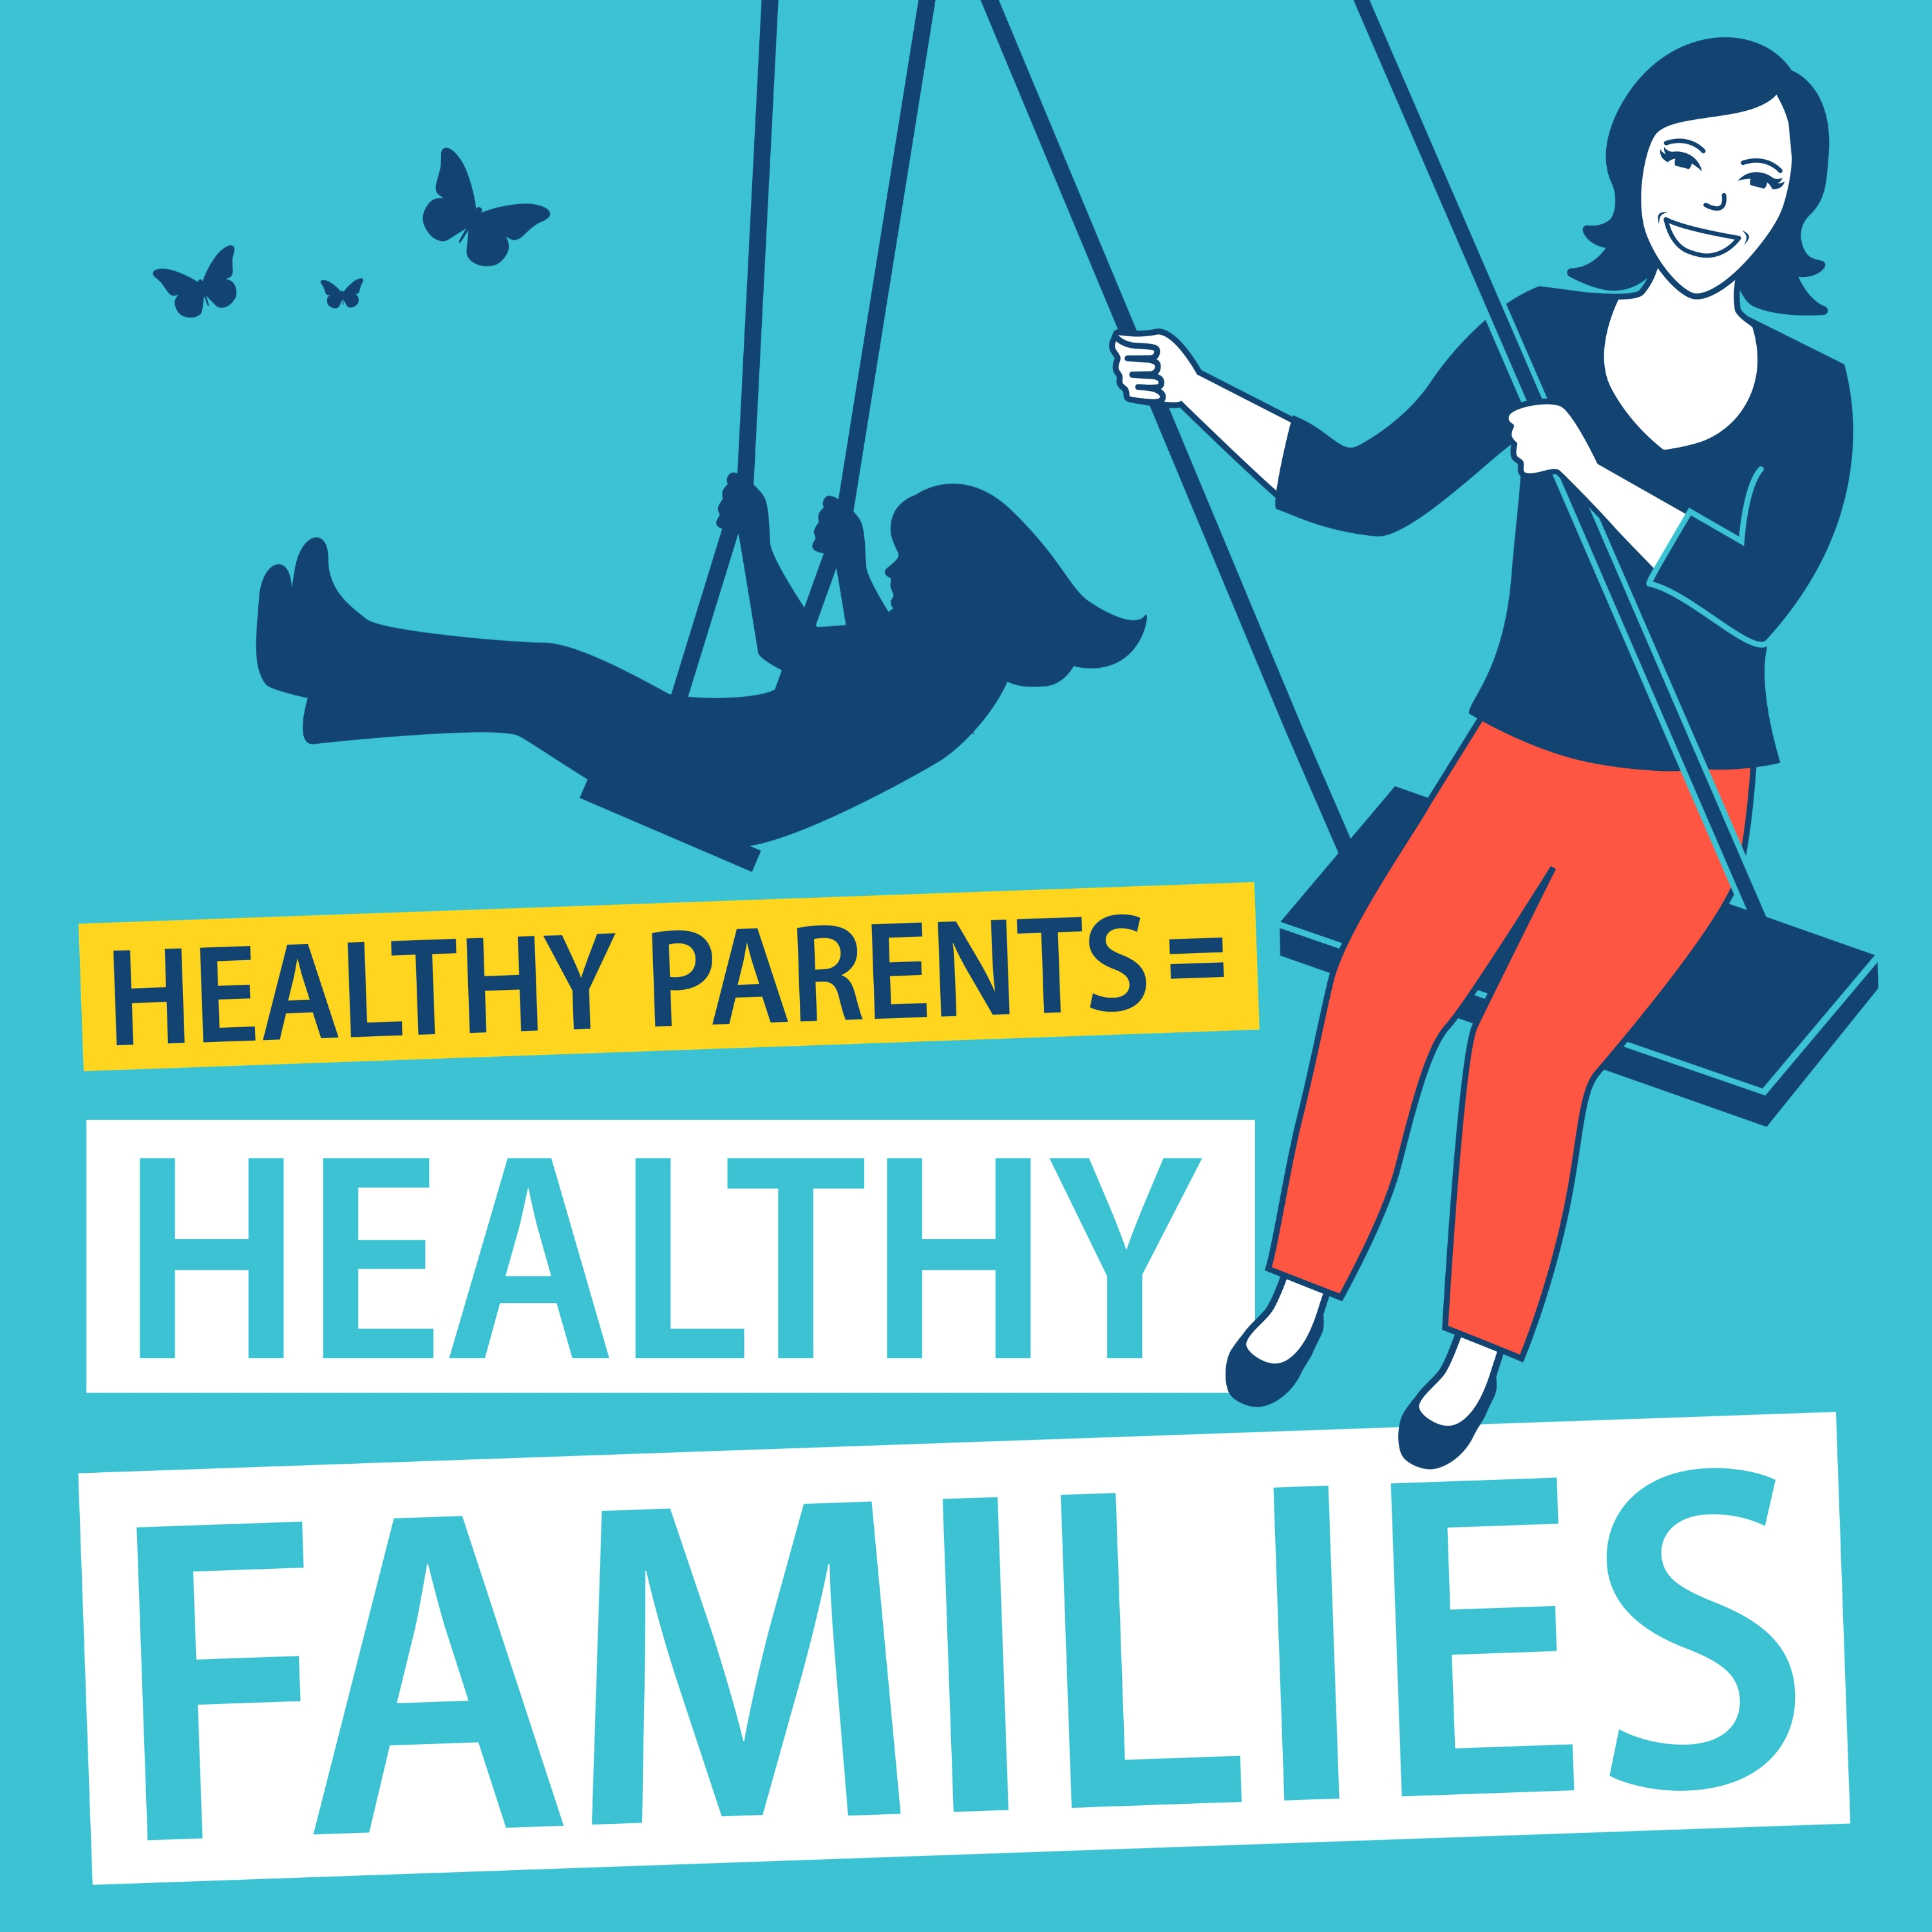 Healthy Parents (equals) Healthy Families